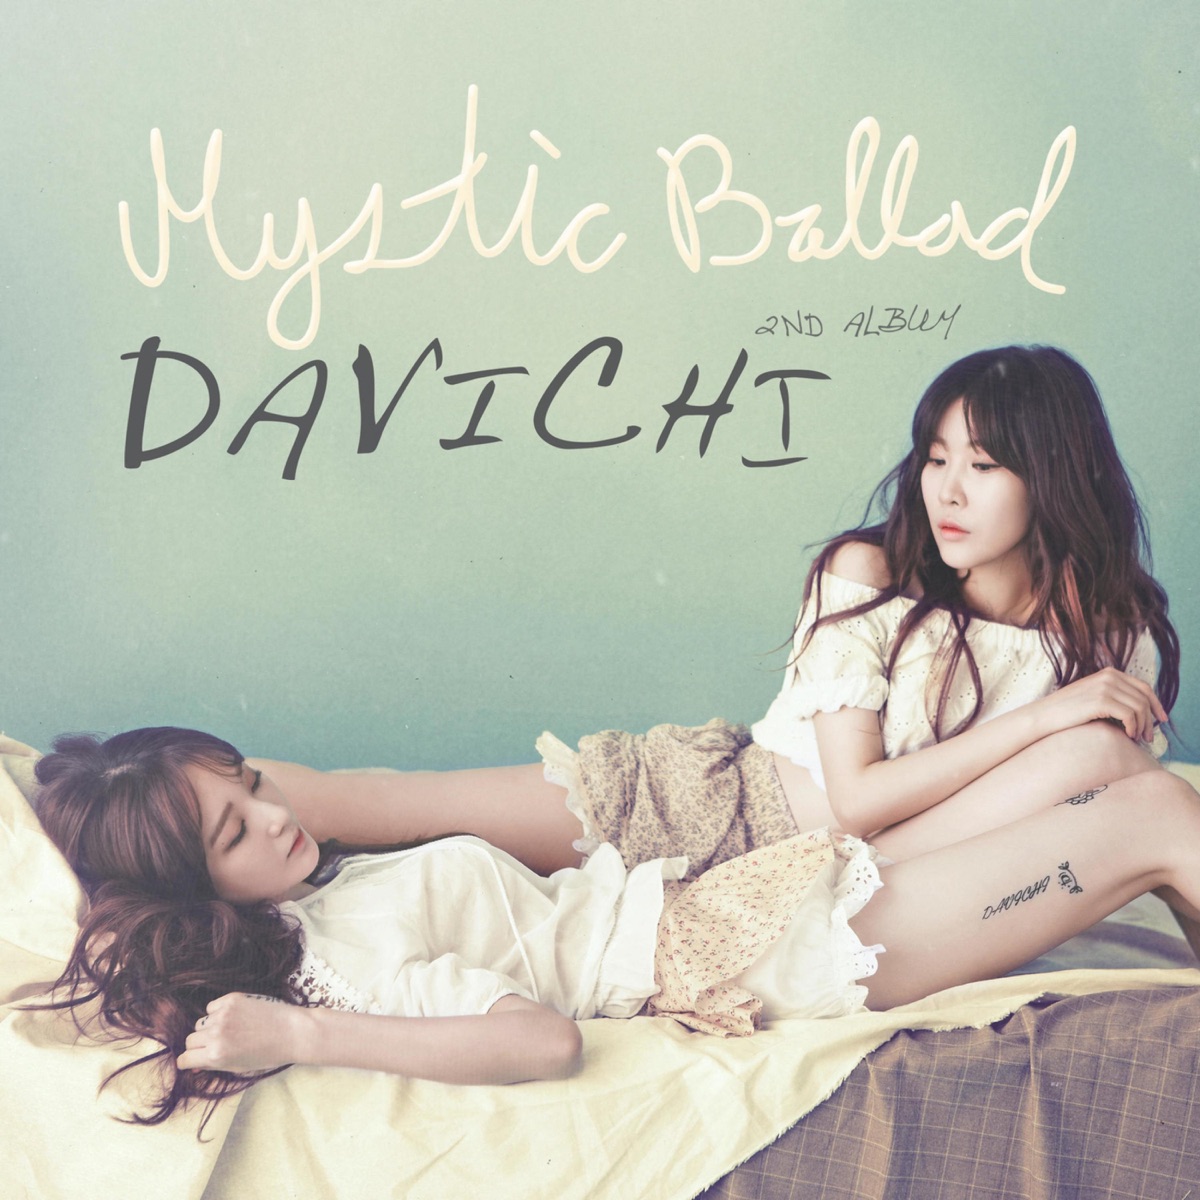 Davichi – MYSTIC BALLAD, Pt. 2